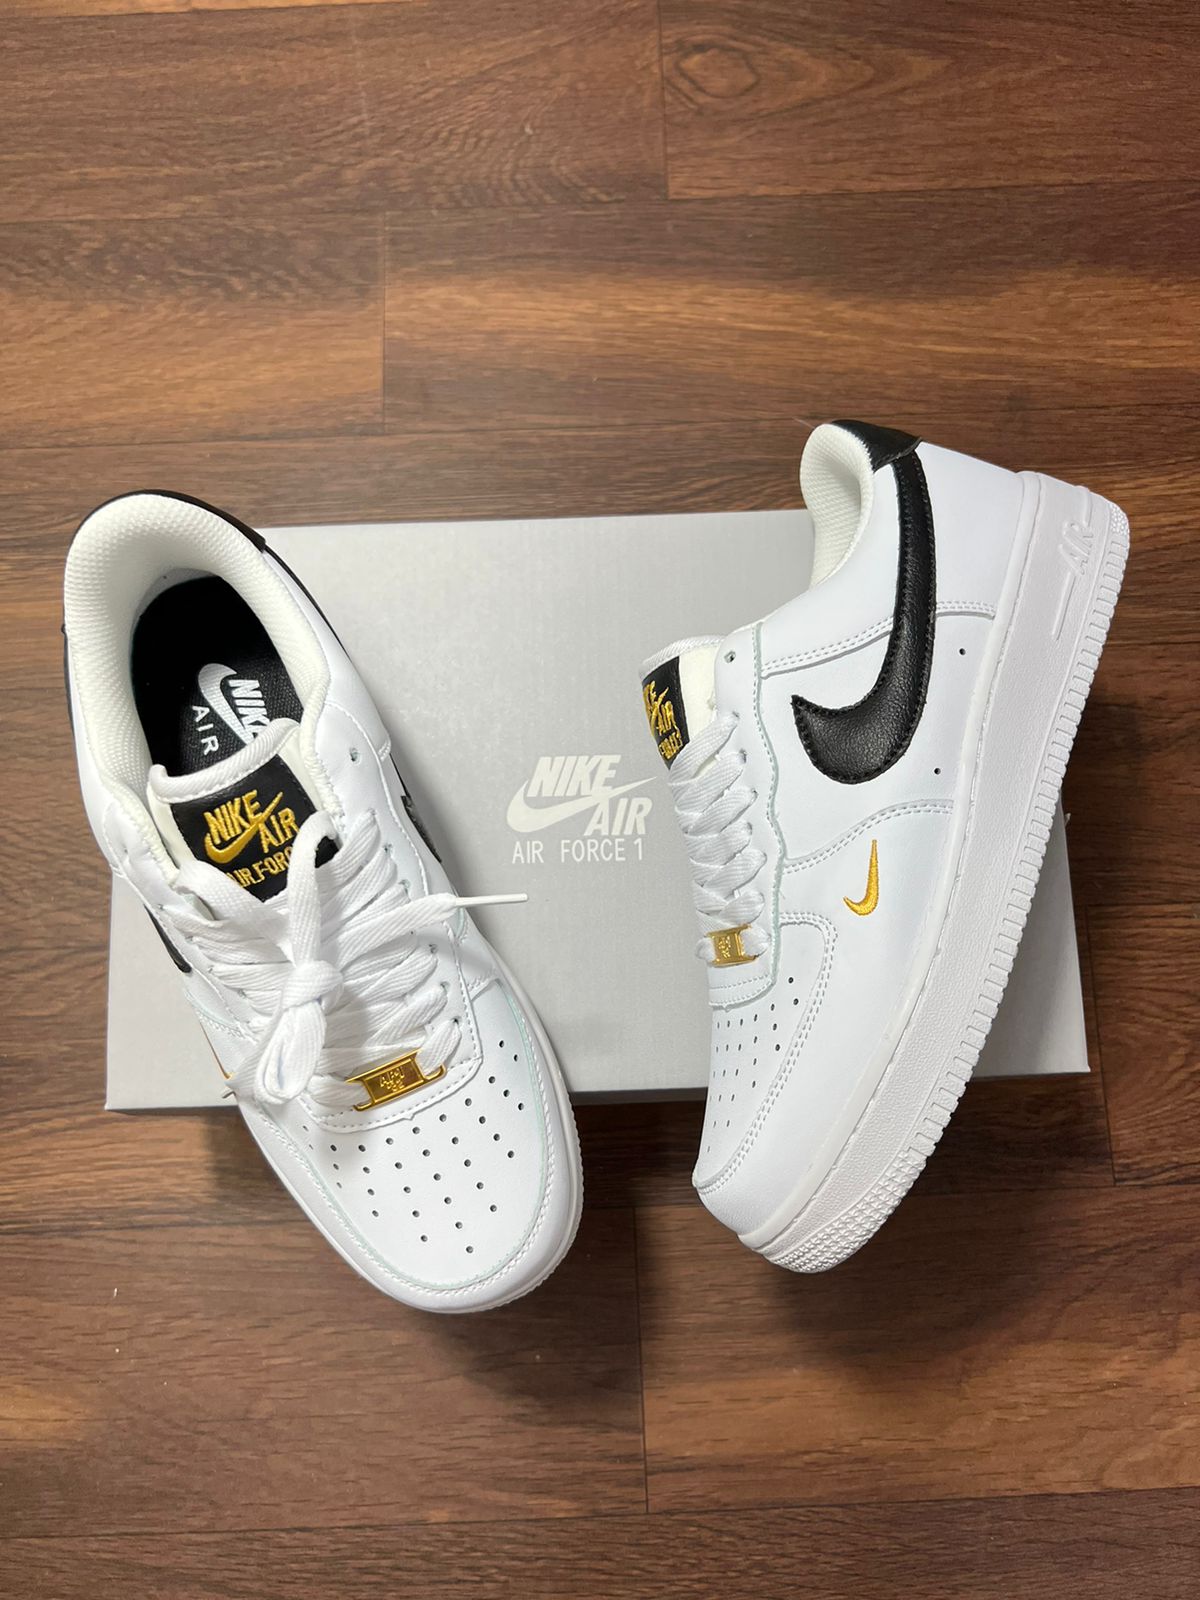 Lv8 New White Sneakers In Stock